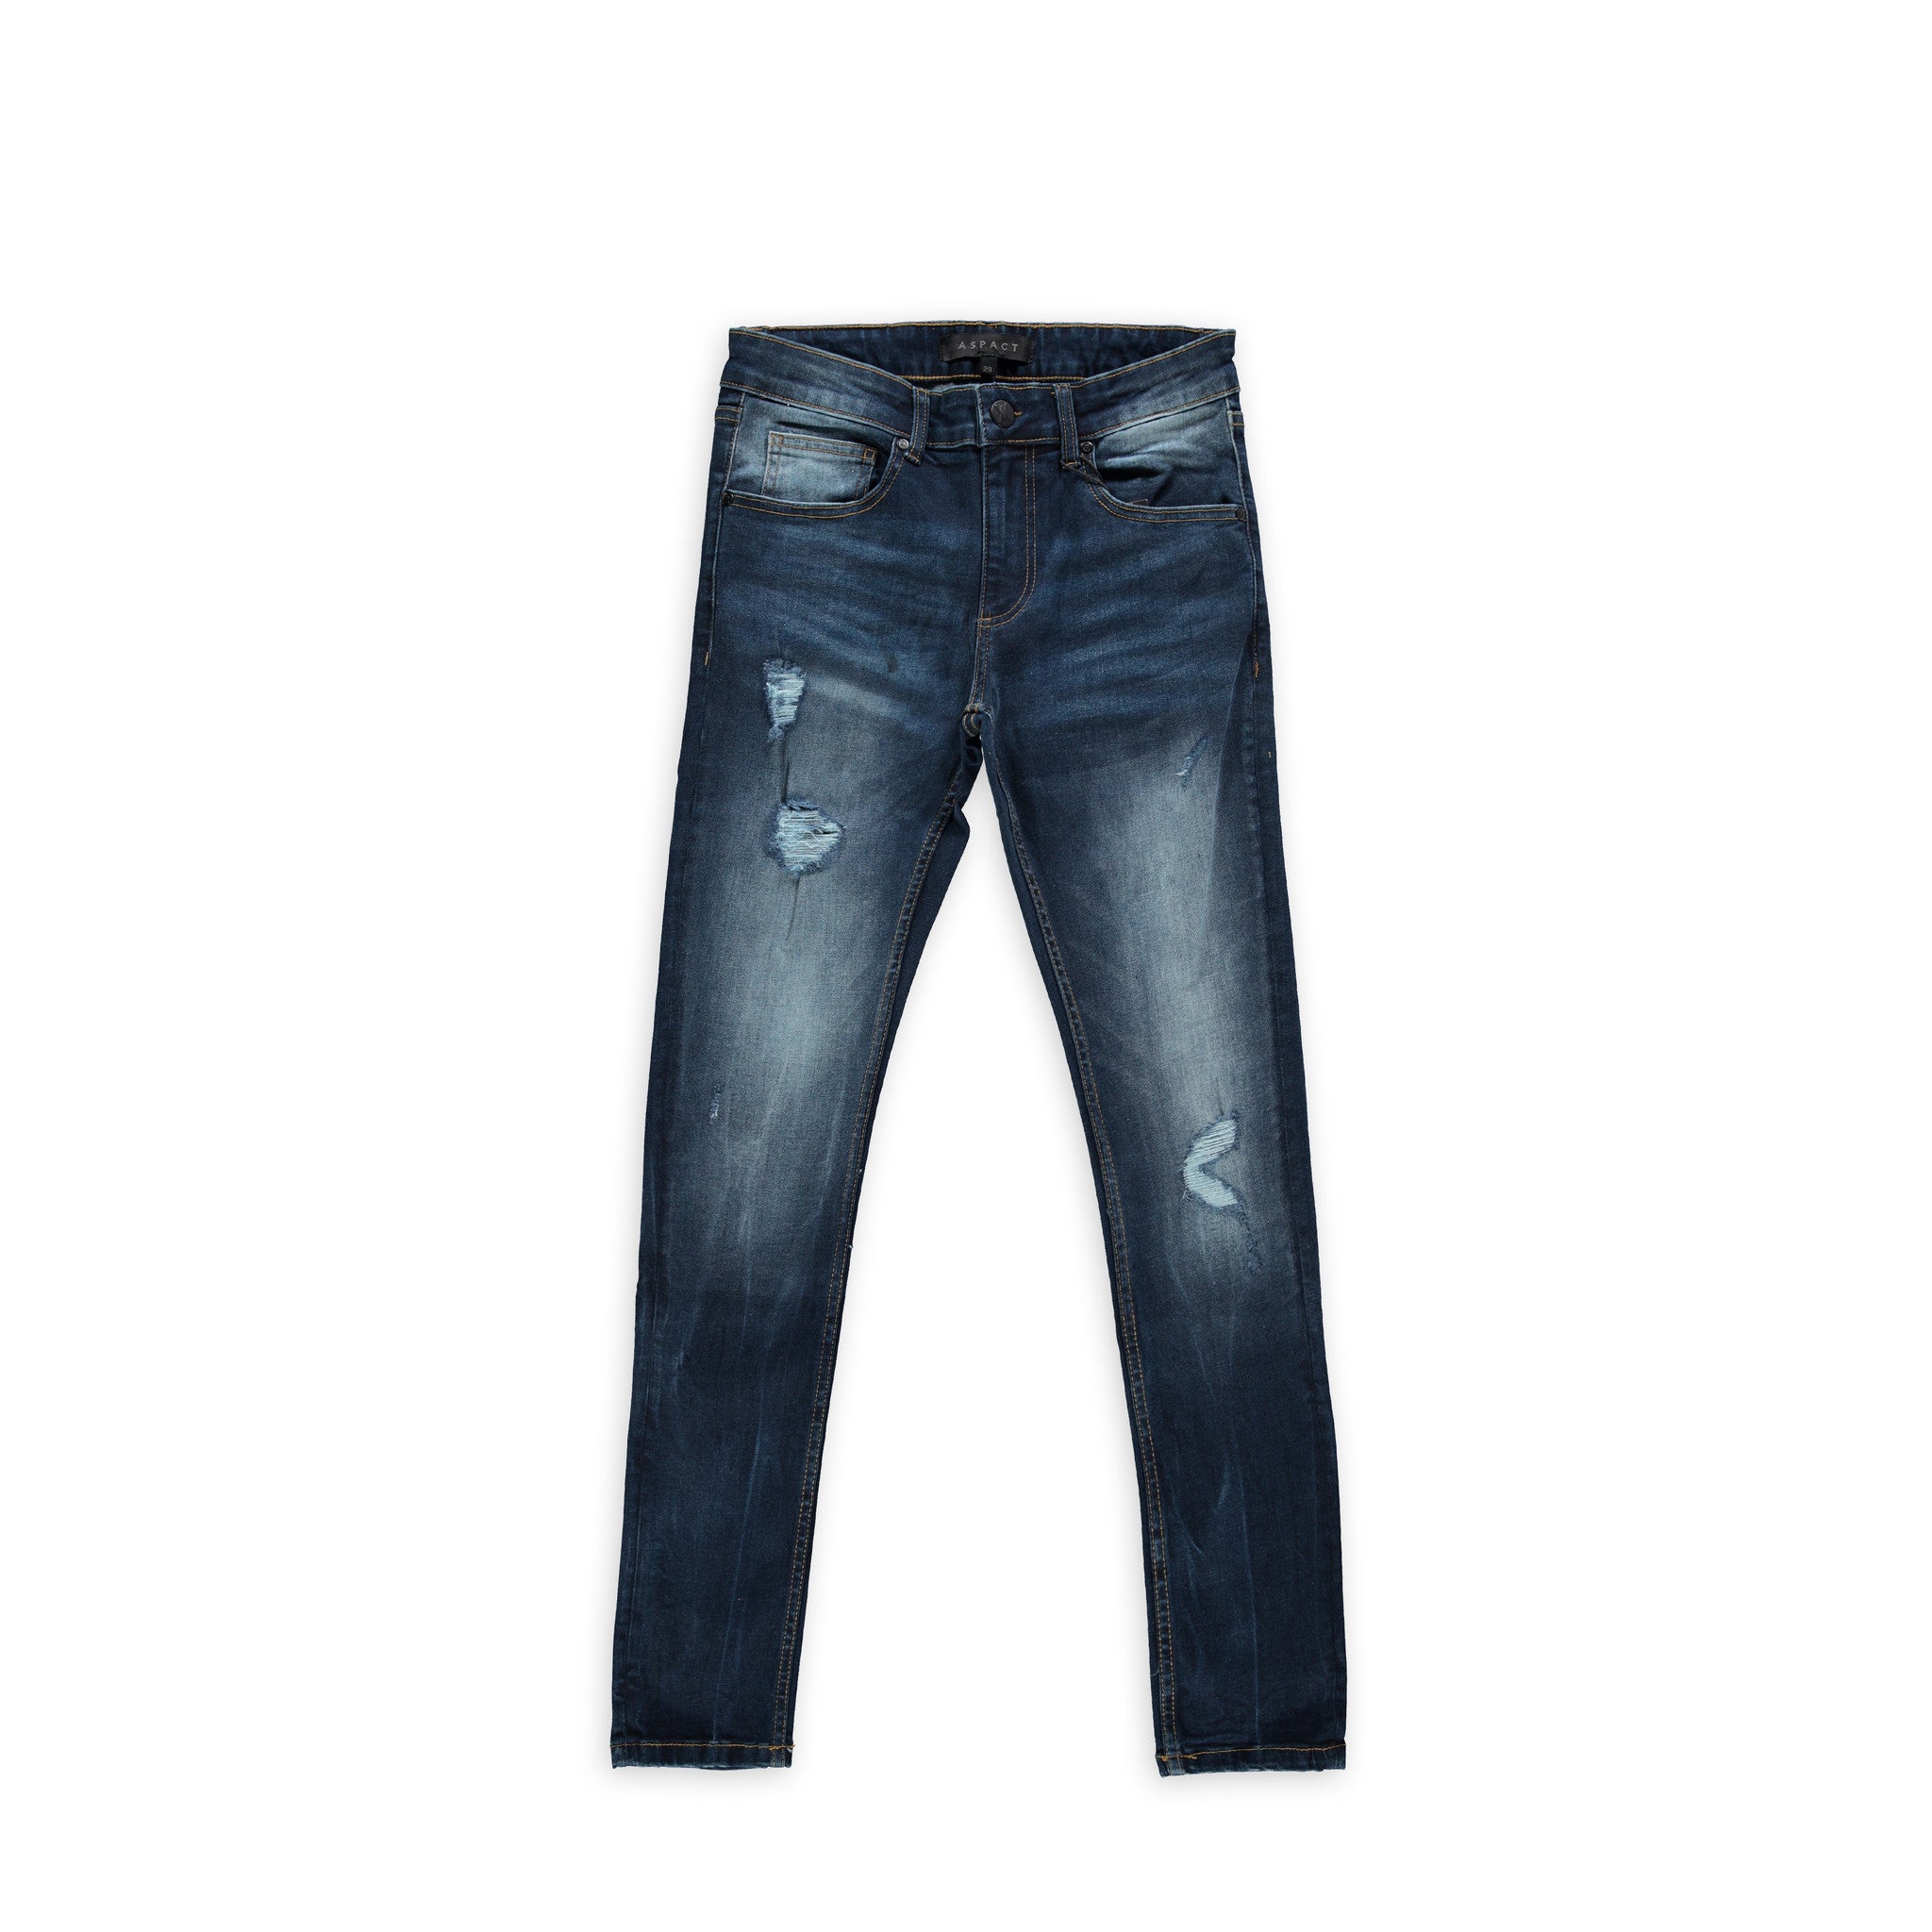 Aspact Jeans 19.0 Blauw